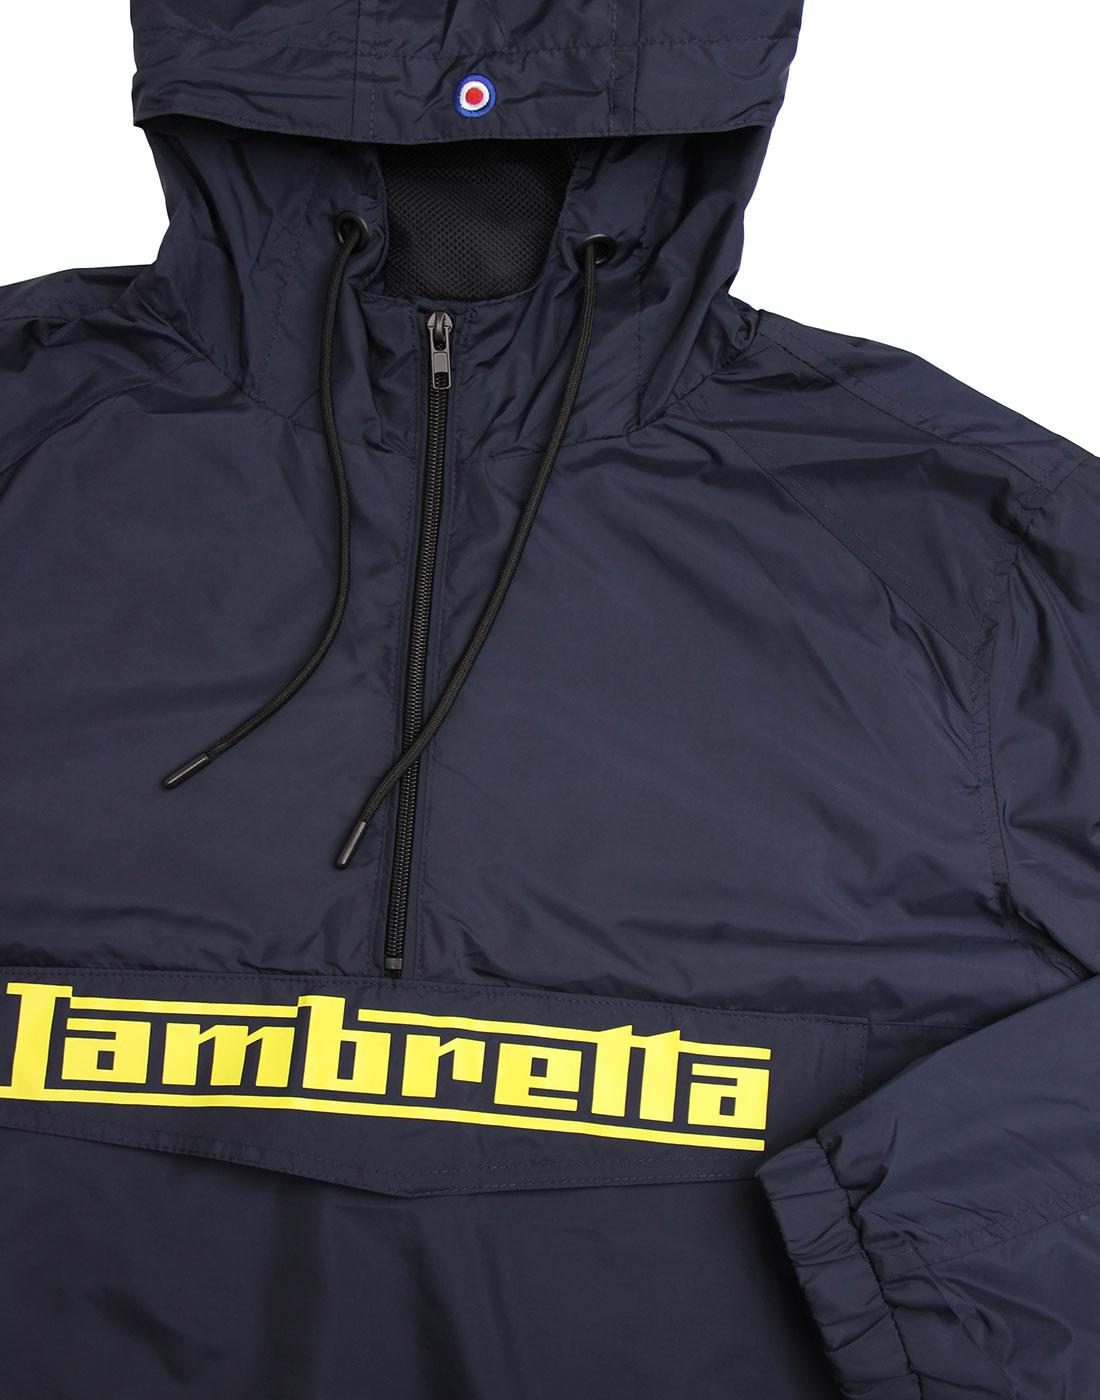 Lambretta Mens Over The Head Lightweight Hooded 1//2 Zip Up Top Pullover Jacket